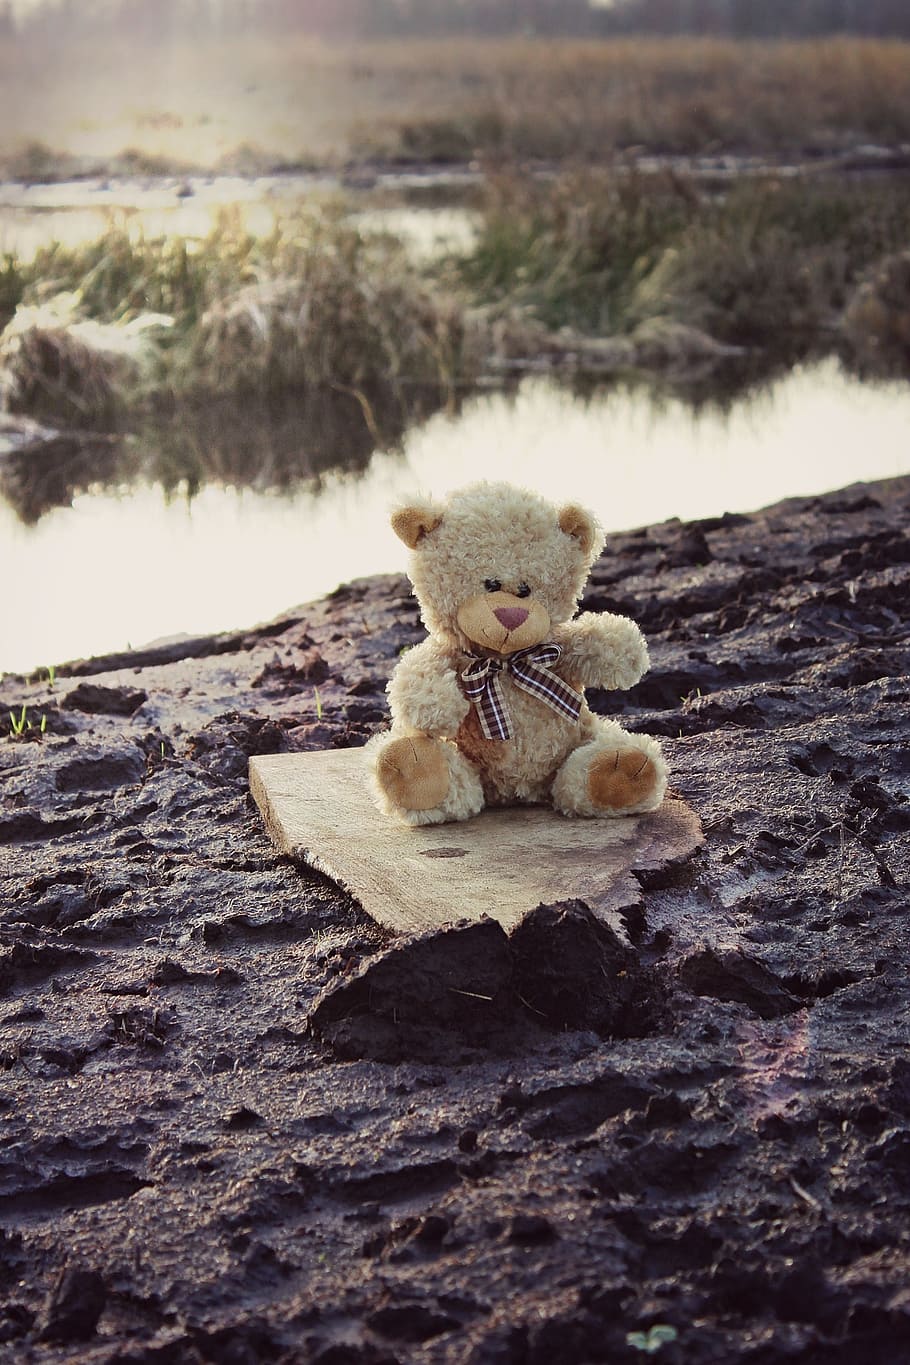 Teddy Bear, Soft Toy, Bears, teddy, bear, stuffed animal, sweet, cute, snuggle, fun